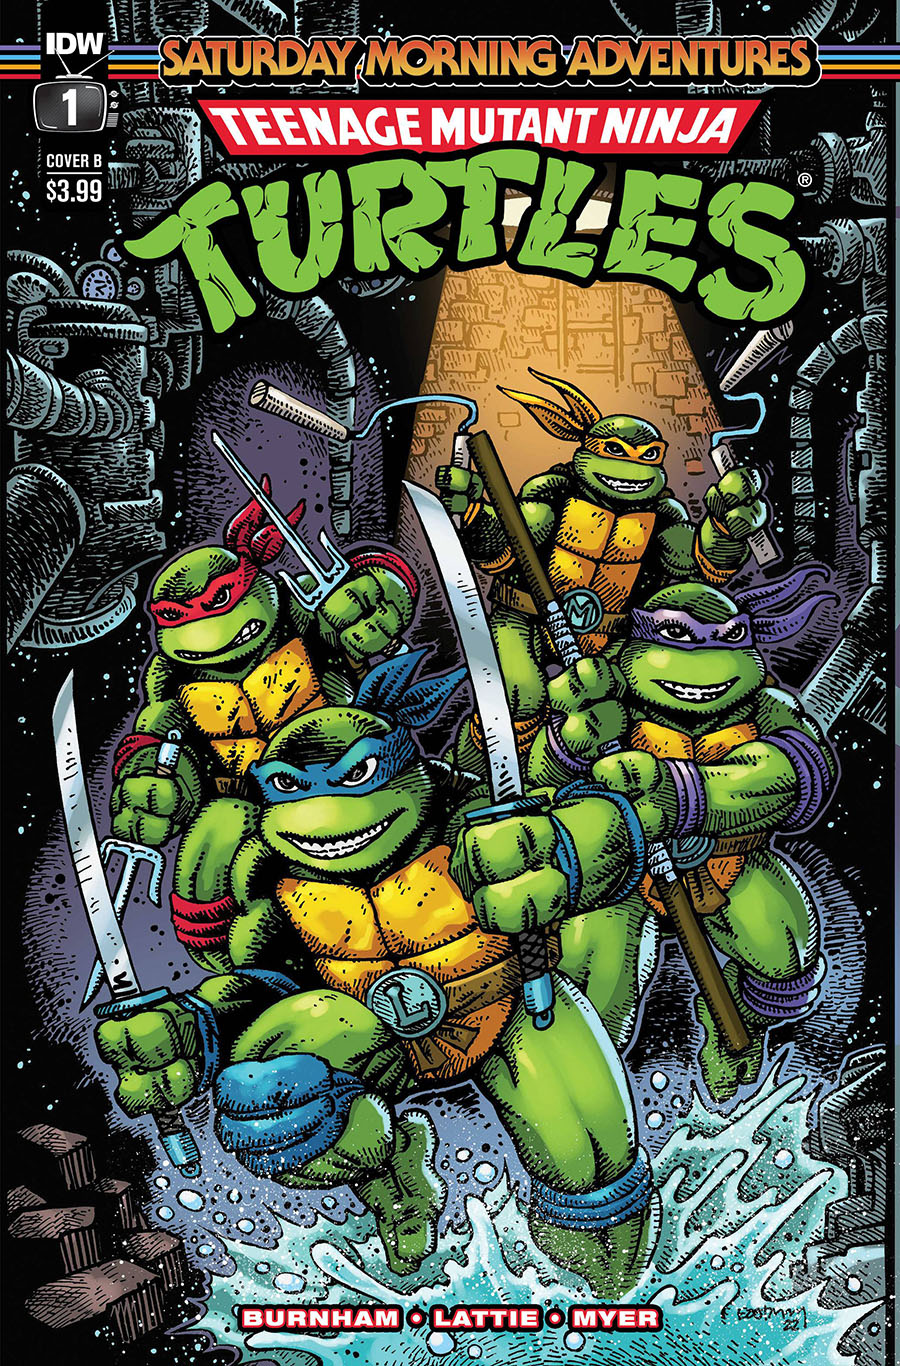 Teenage Mutant Ninja Turtles Saturday Morning Adventures #1 Cover B Variant Kevin Eastman Cover